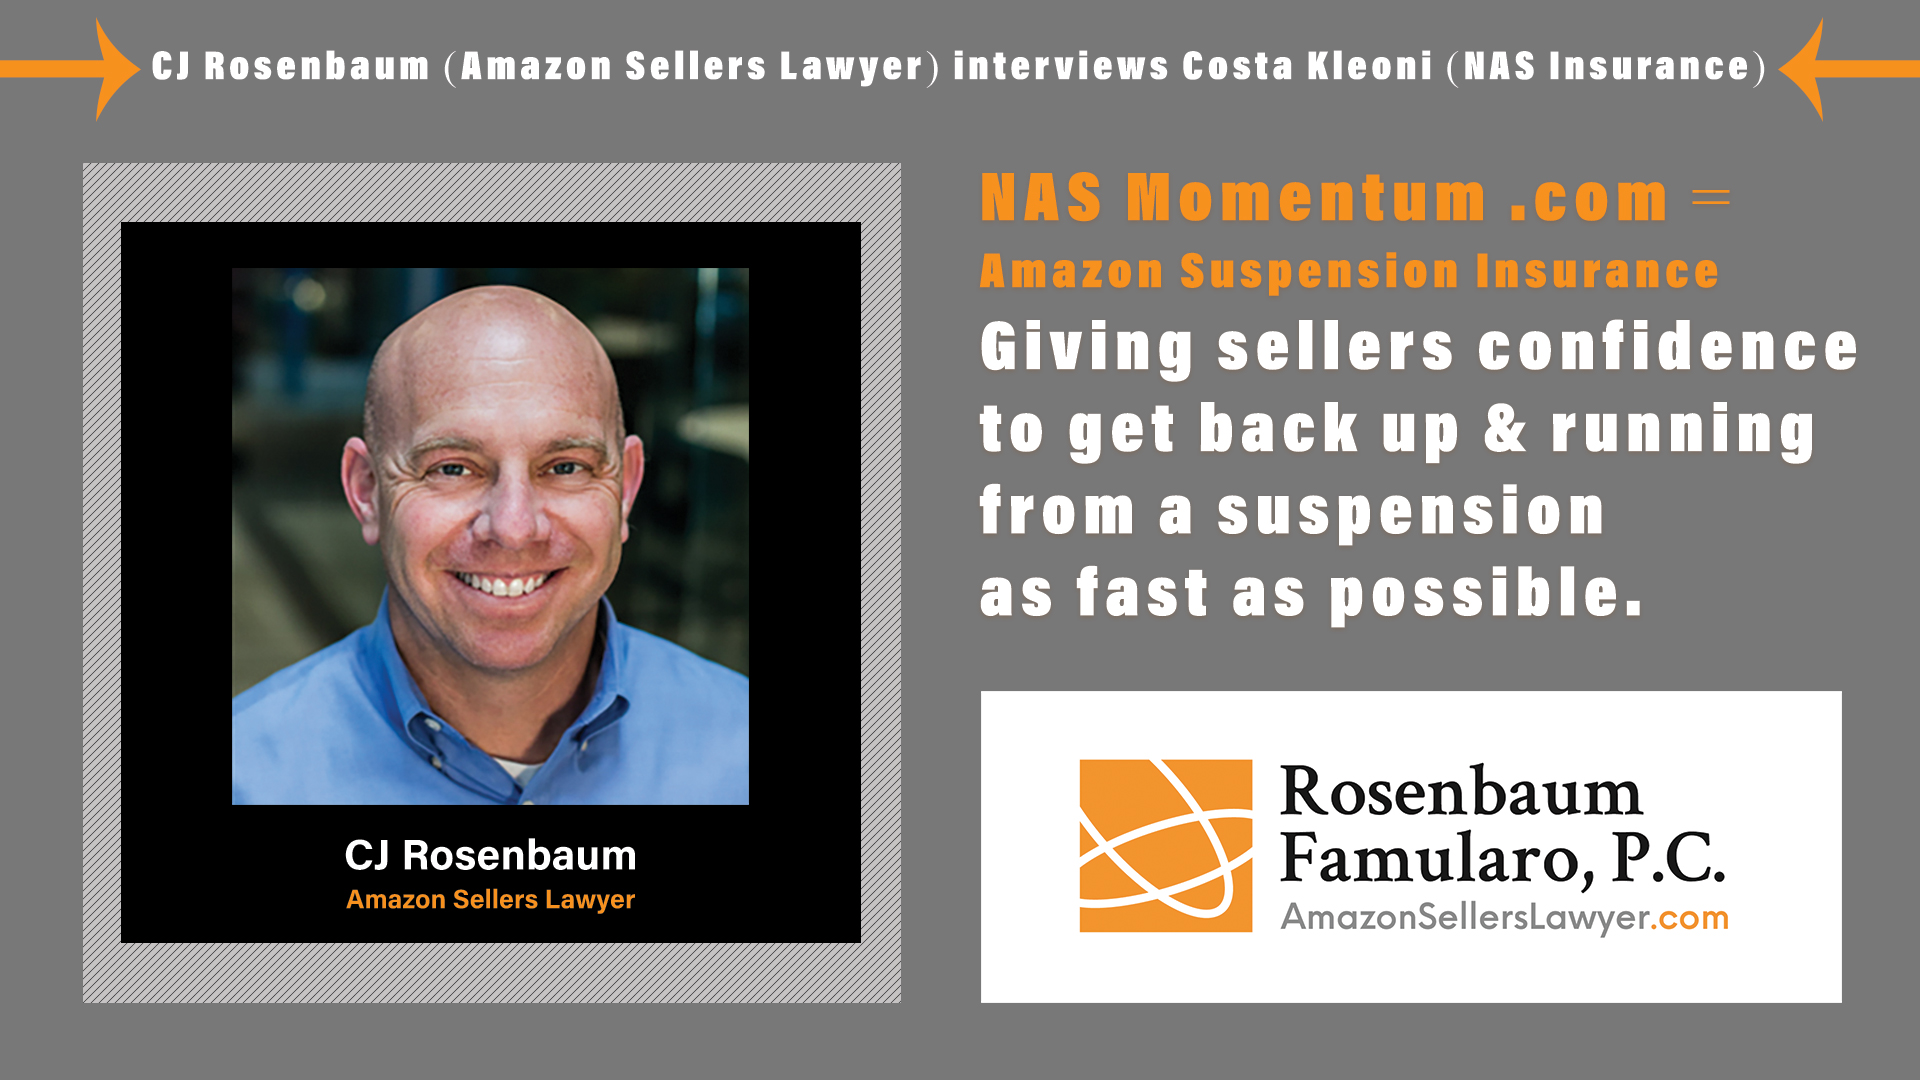 CJ Rosenbaum of Amazon Sellers Lawyer interviews Costa Kleoni of NAS Insurance